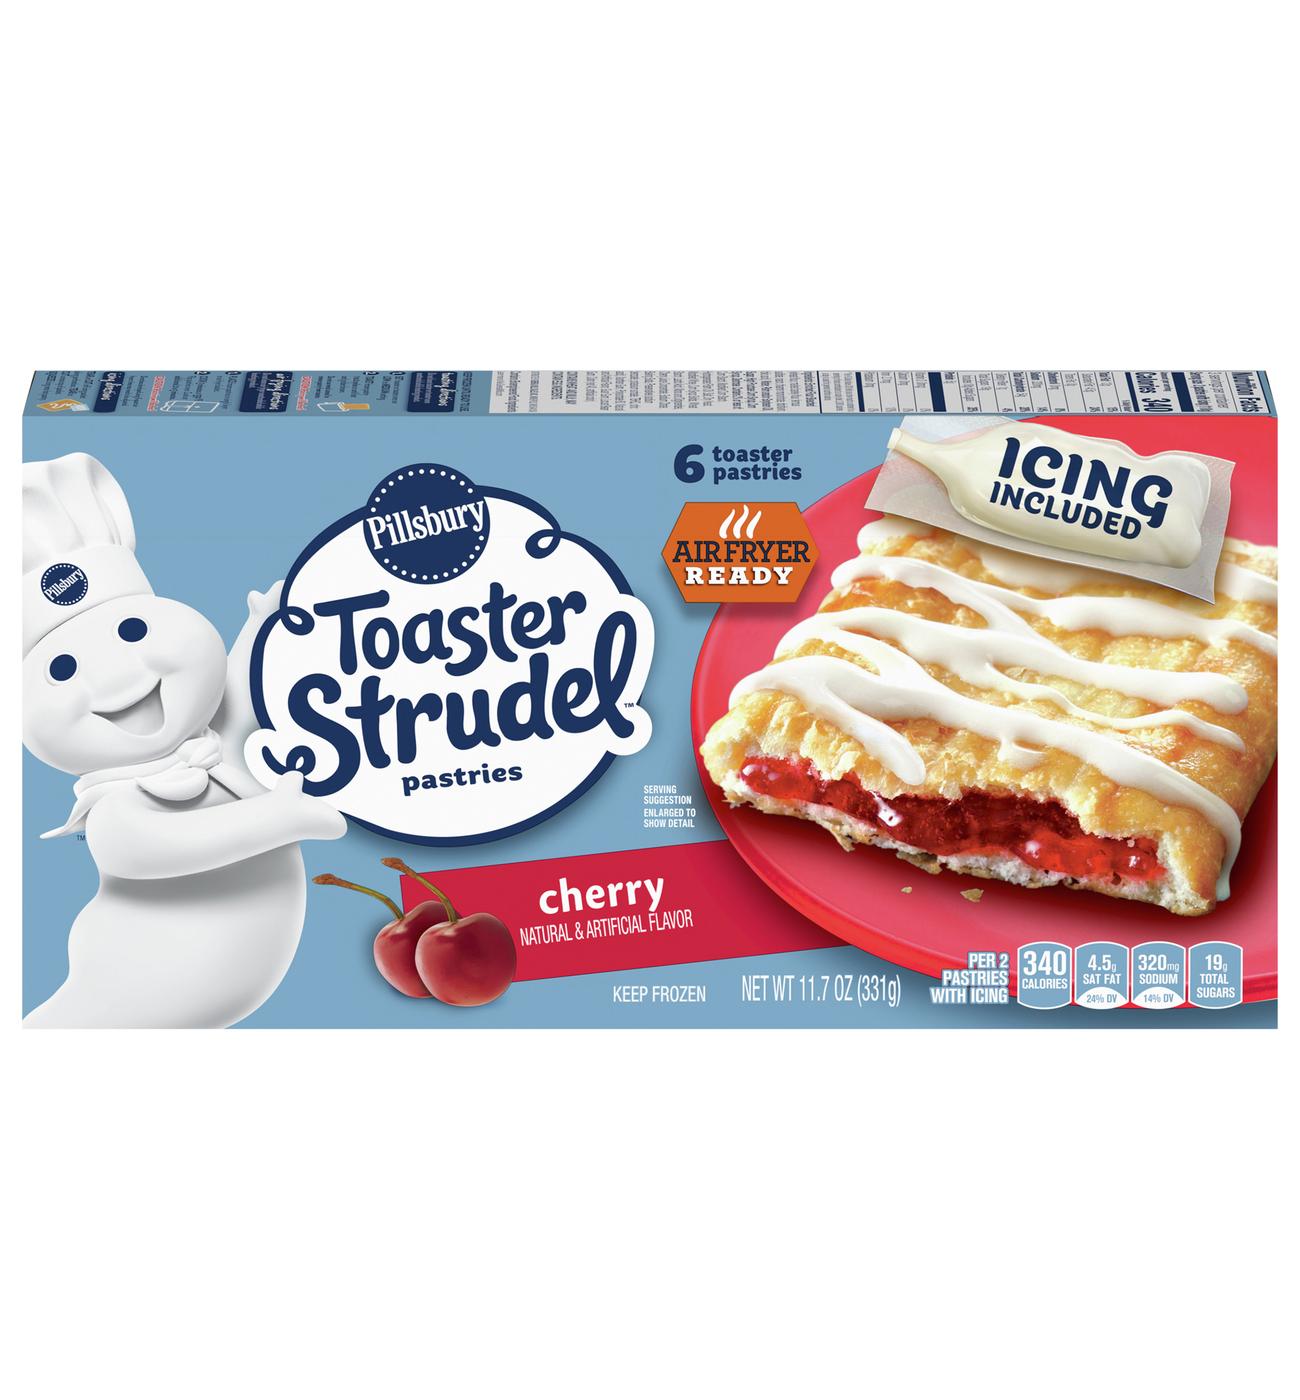 Pillsbury Toaster Strudel Frozen Pastries - Cherry; image 1 of 2